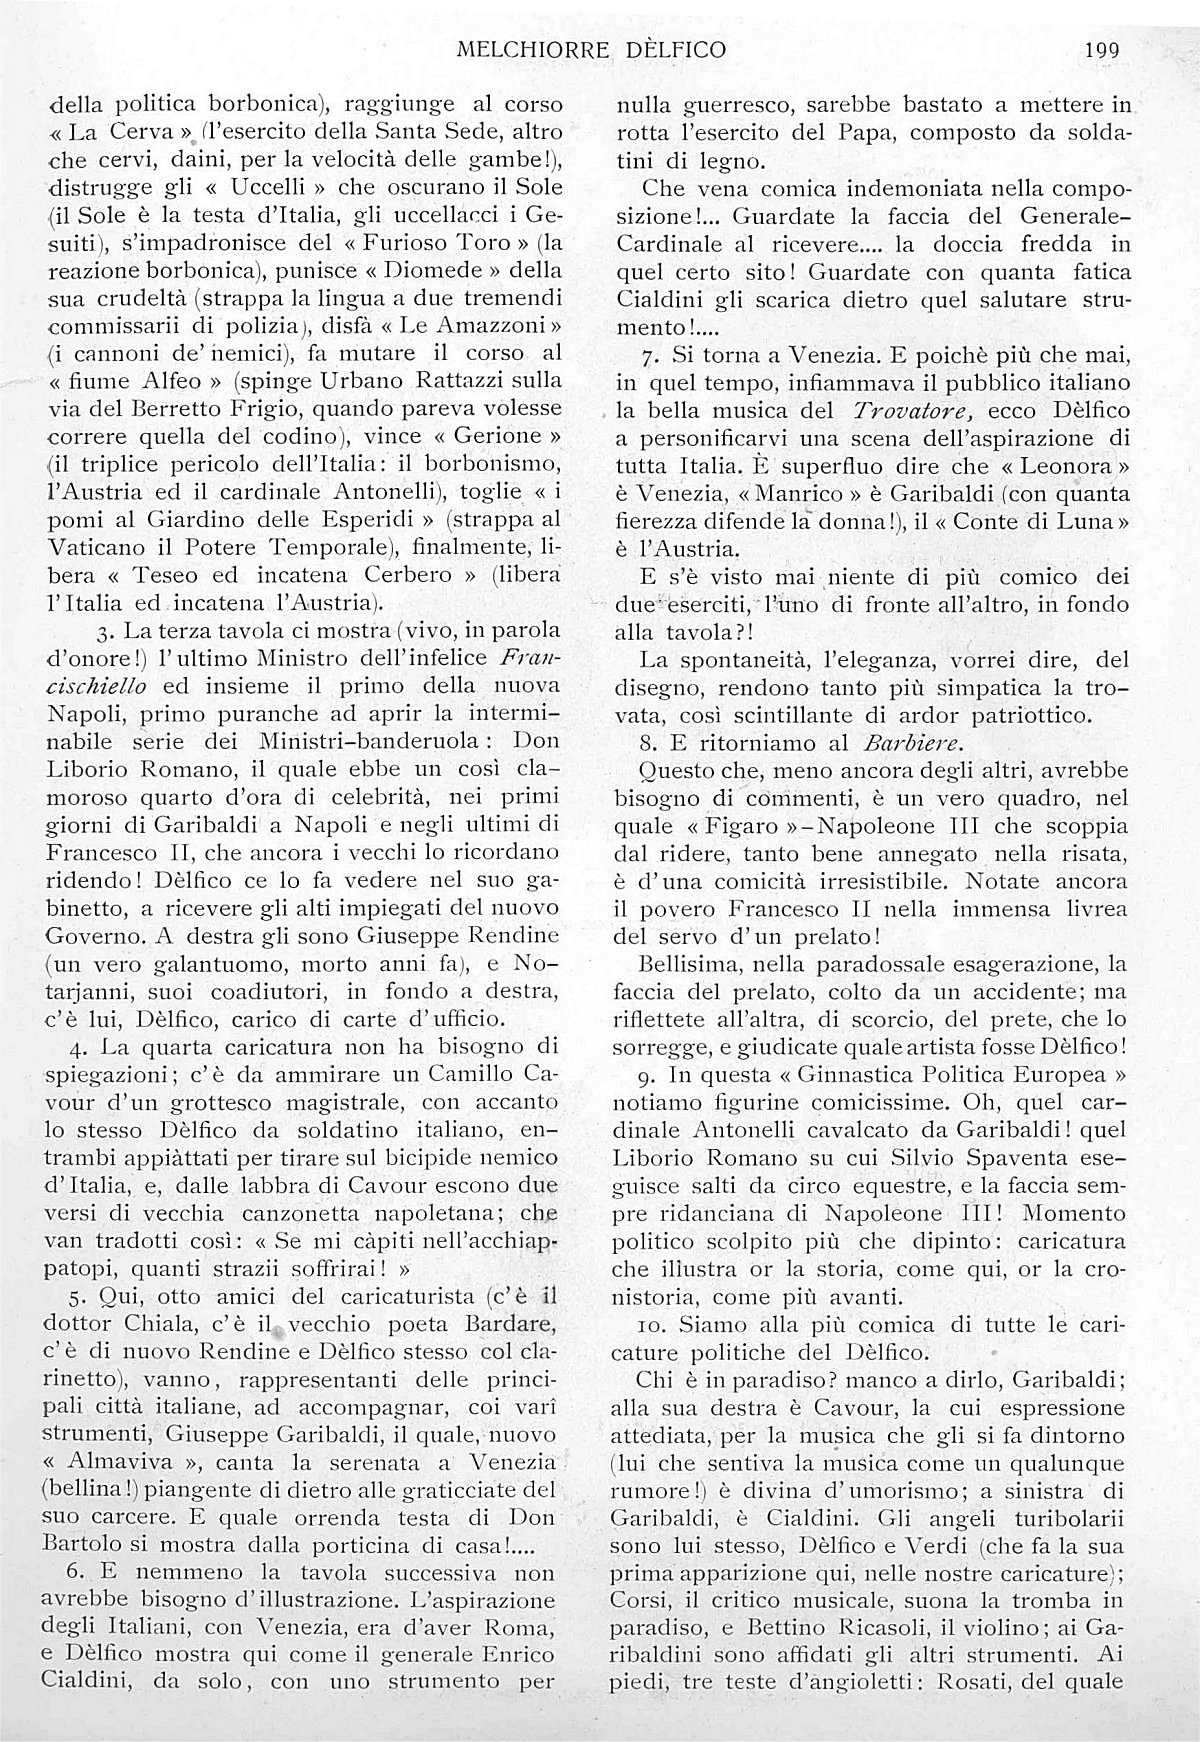 "Ars et Labor", Marzo 1906, anno 61°, n. 3, pag. 199